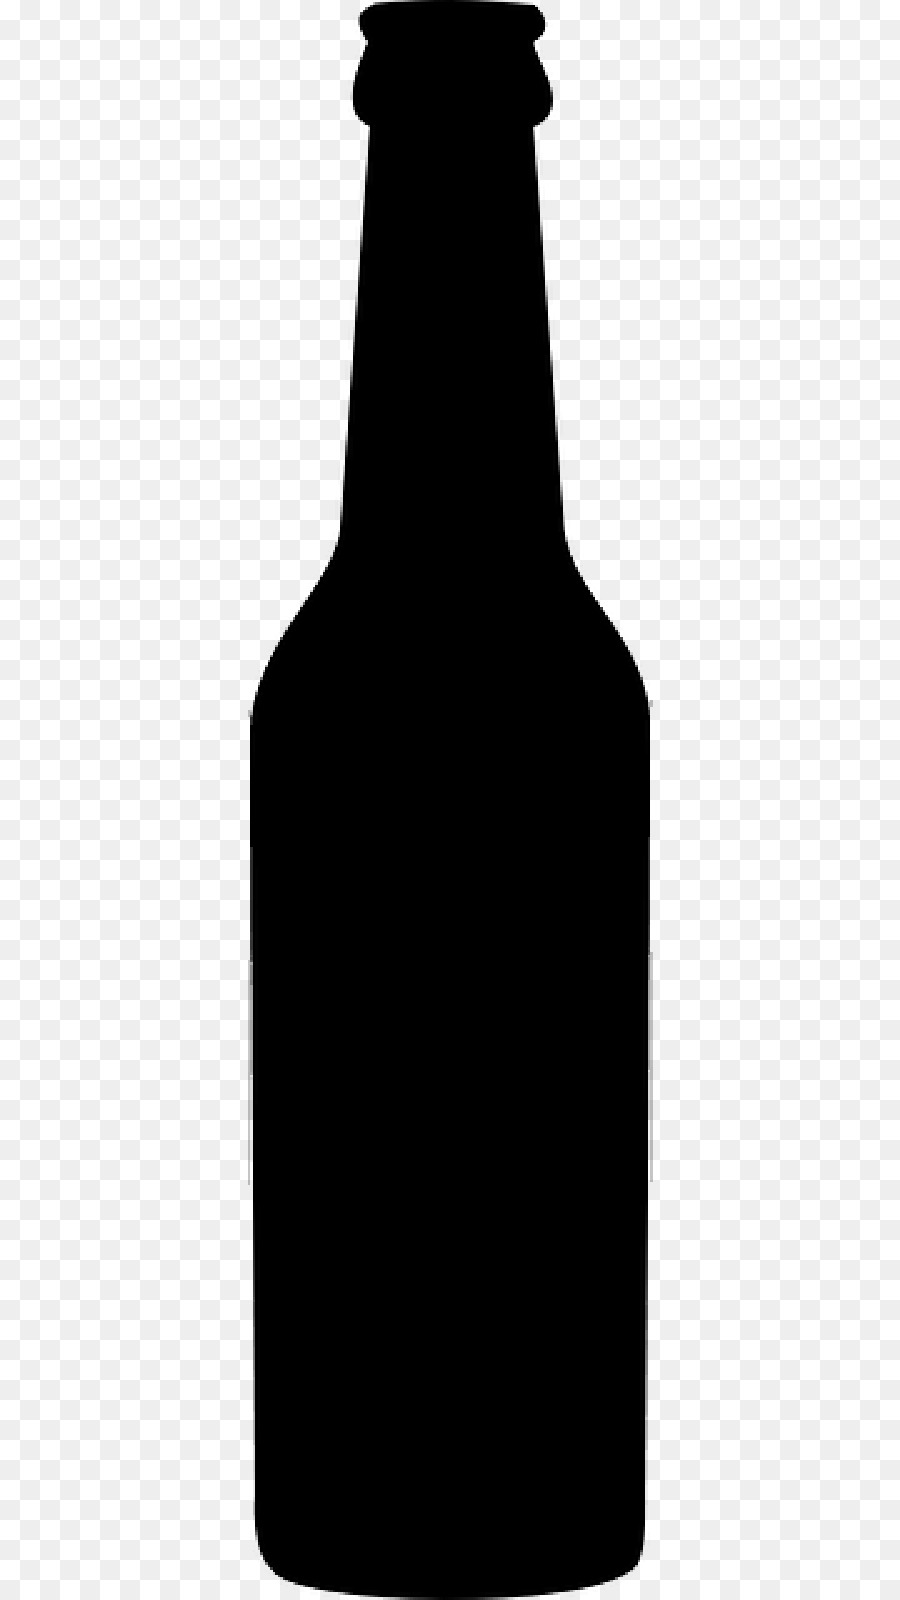 Beer bottle Red Wine -  png download - 800*1600 - Free Transparent Beer Bottle png Download.